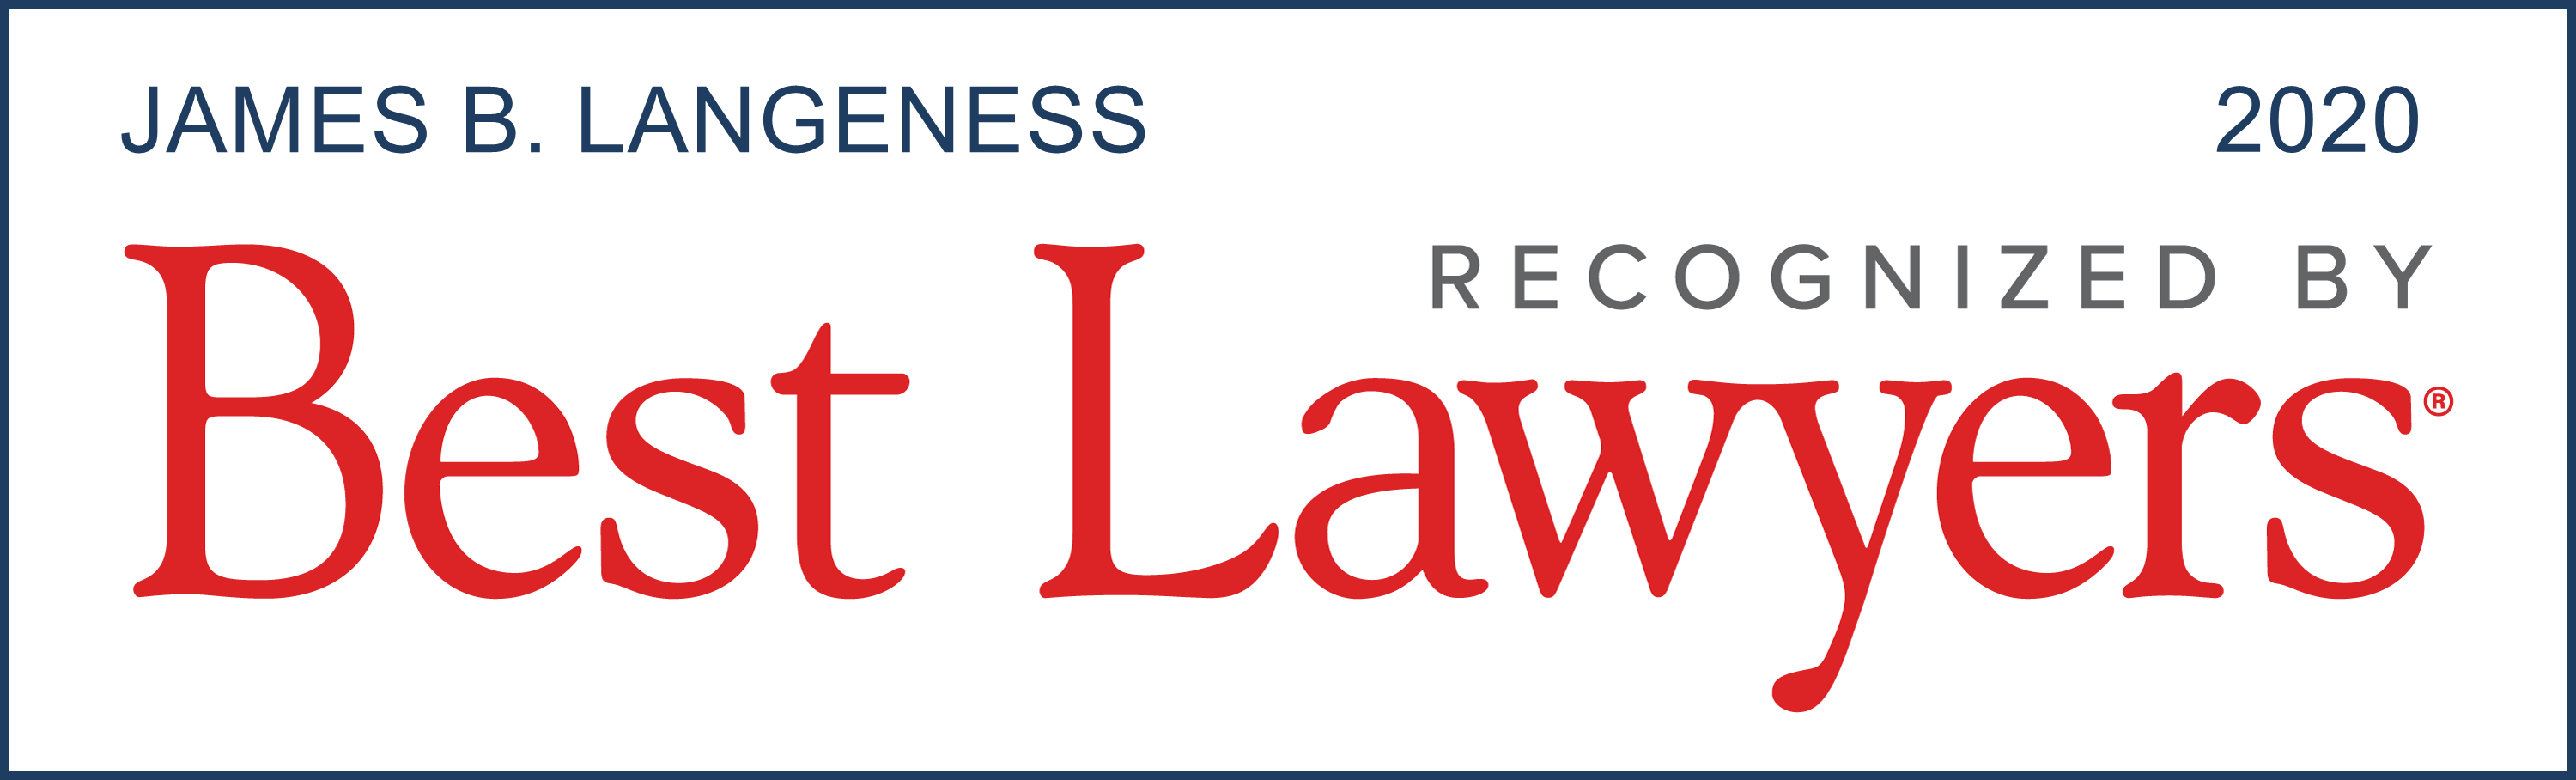 Best Lawyers 2020 - James B. Langeness